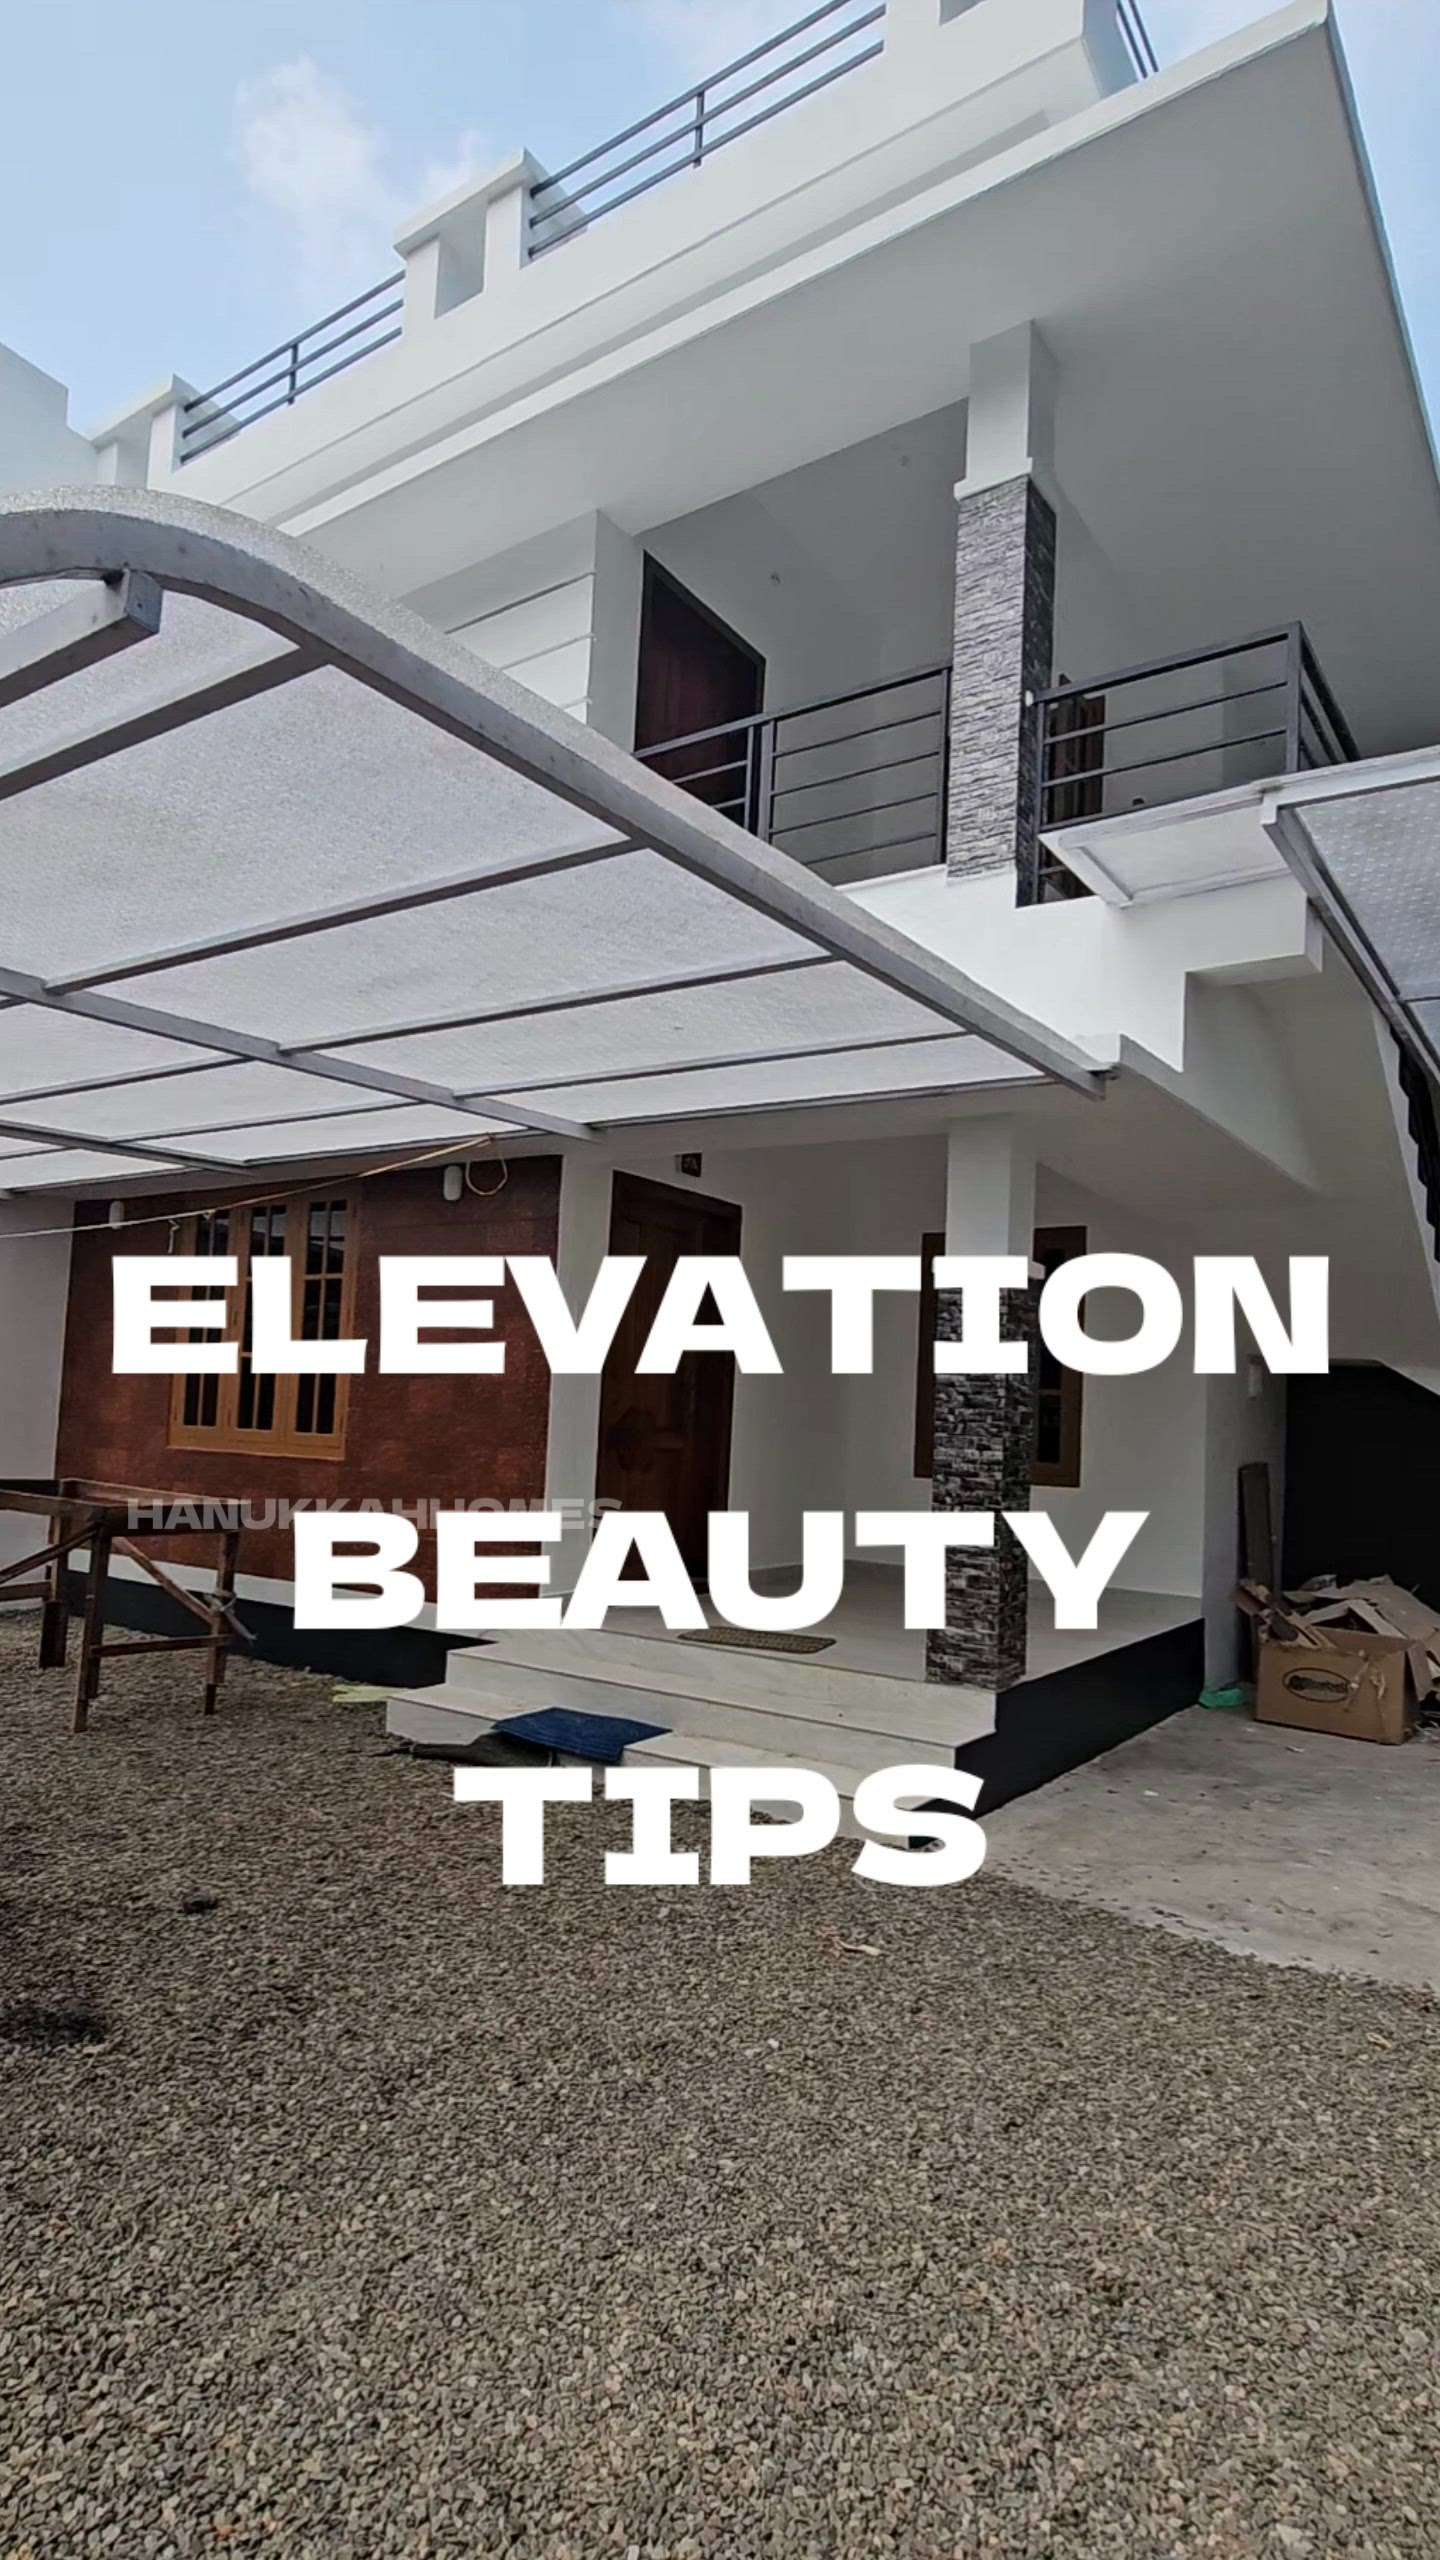 Elevation buty tips #creatorsofkolo #thiruvalla #top3tips #ElevationDesign